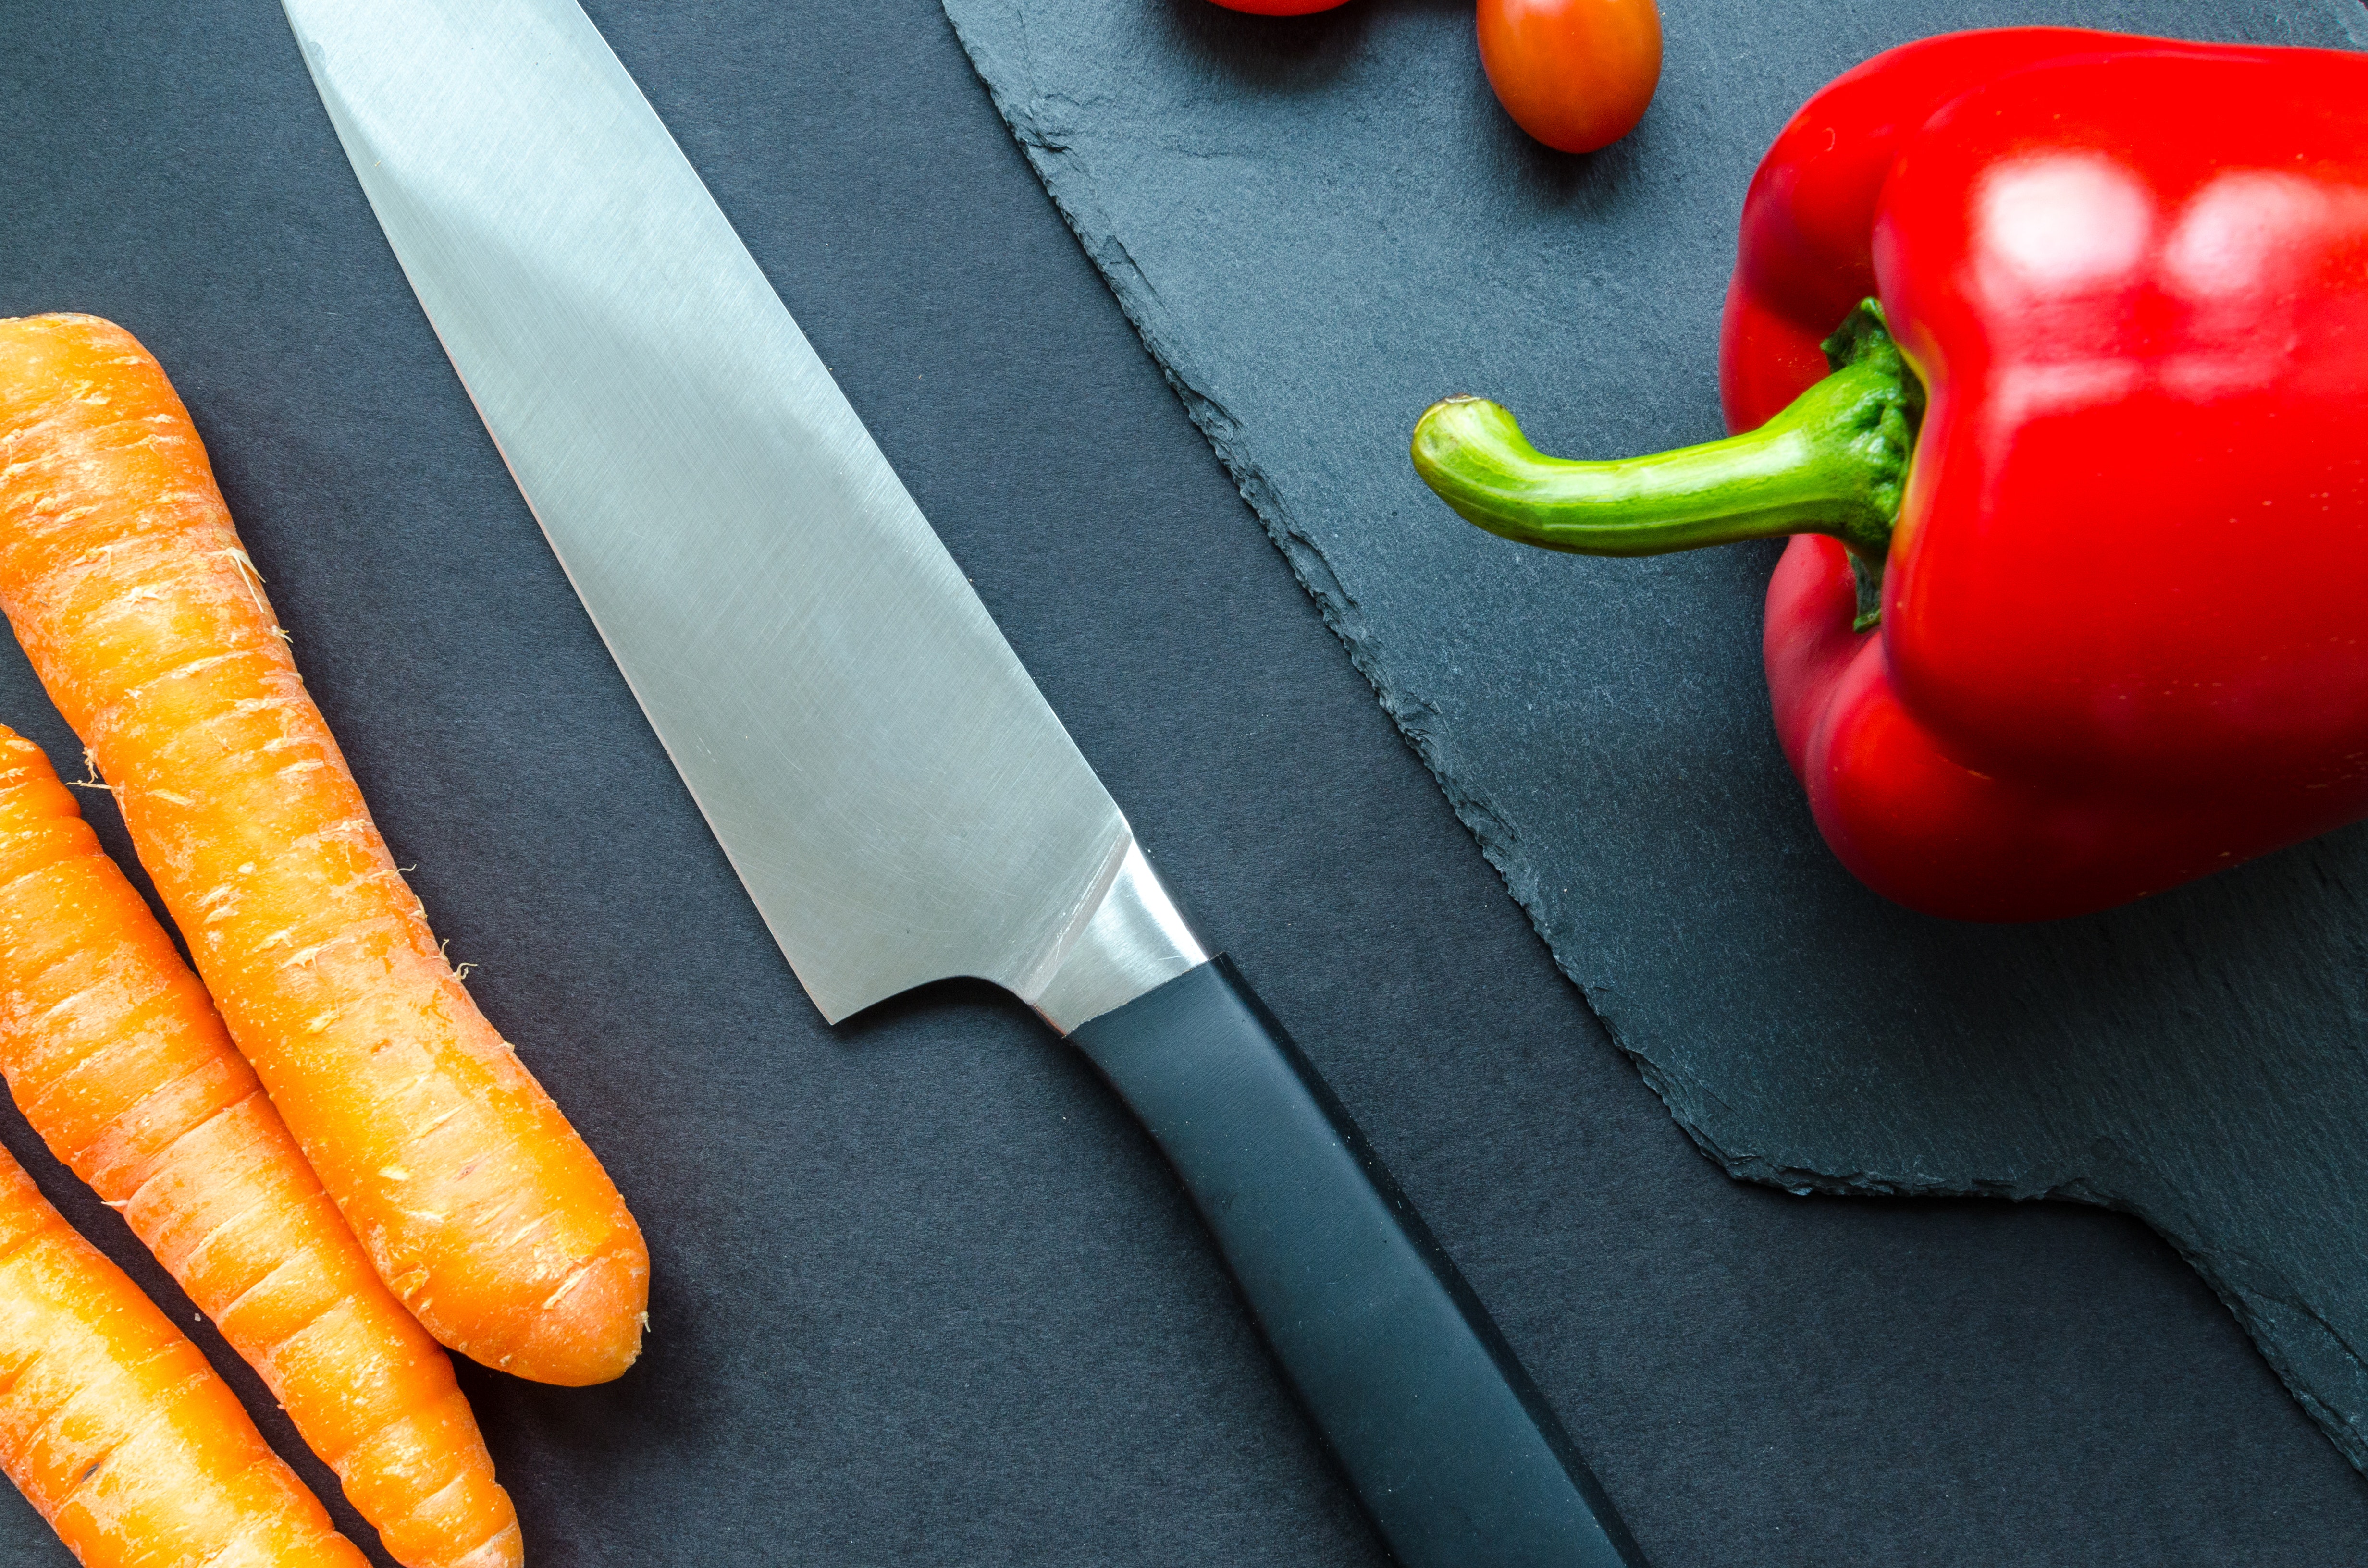 Black handled gray kitchen knife beside orange carrots and red bellpepper photo